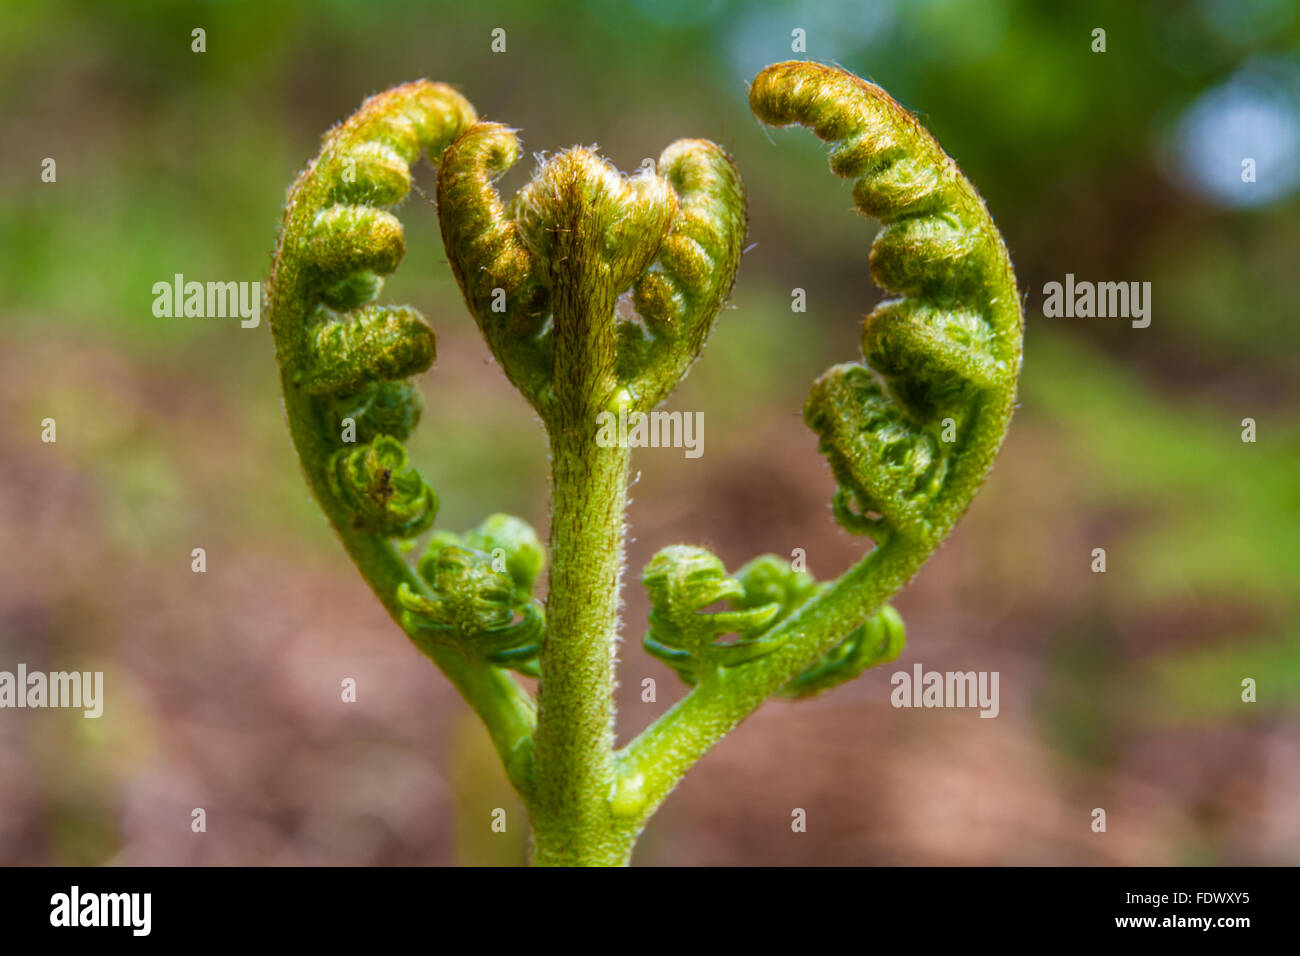 Immature Broad buckler fern, Dryopteris dilatata, newly emerged on forest floor. Stock Photo